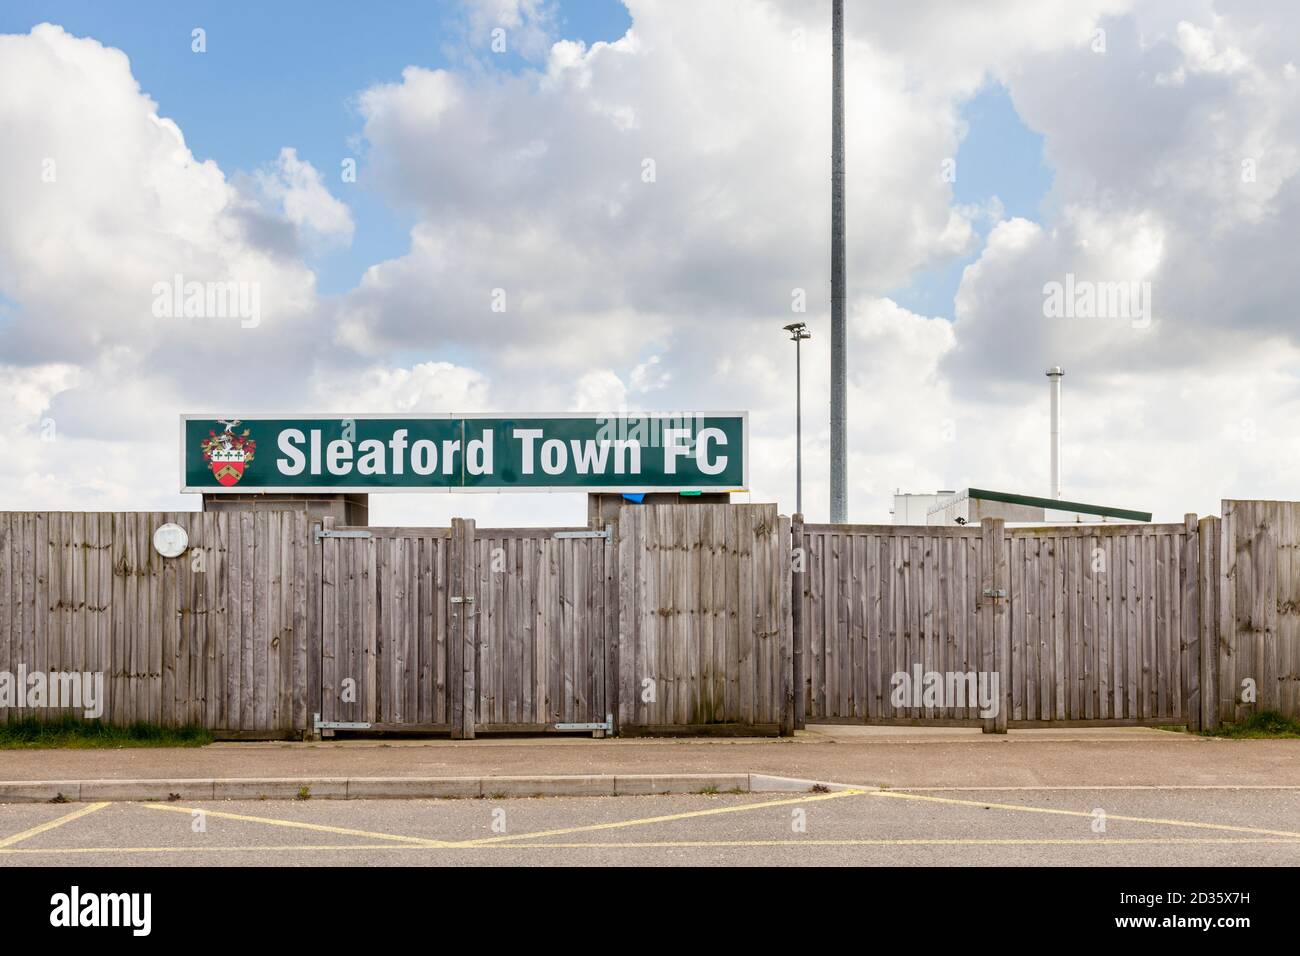 Sleaford Town FC de fútbol en Parque Eslaforde Sleaford, Lincolnshire, Inglaterra, Reino Unido. Foto de stock